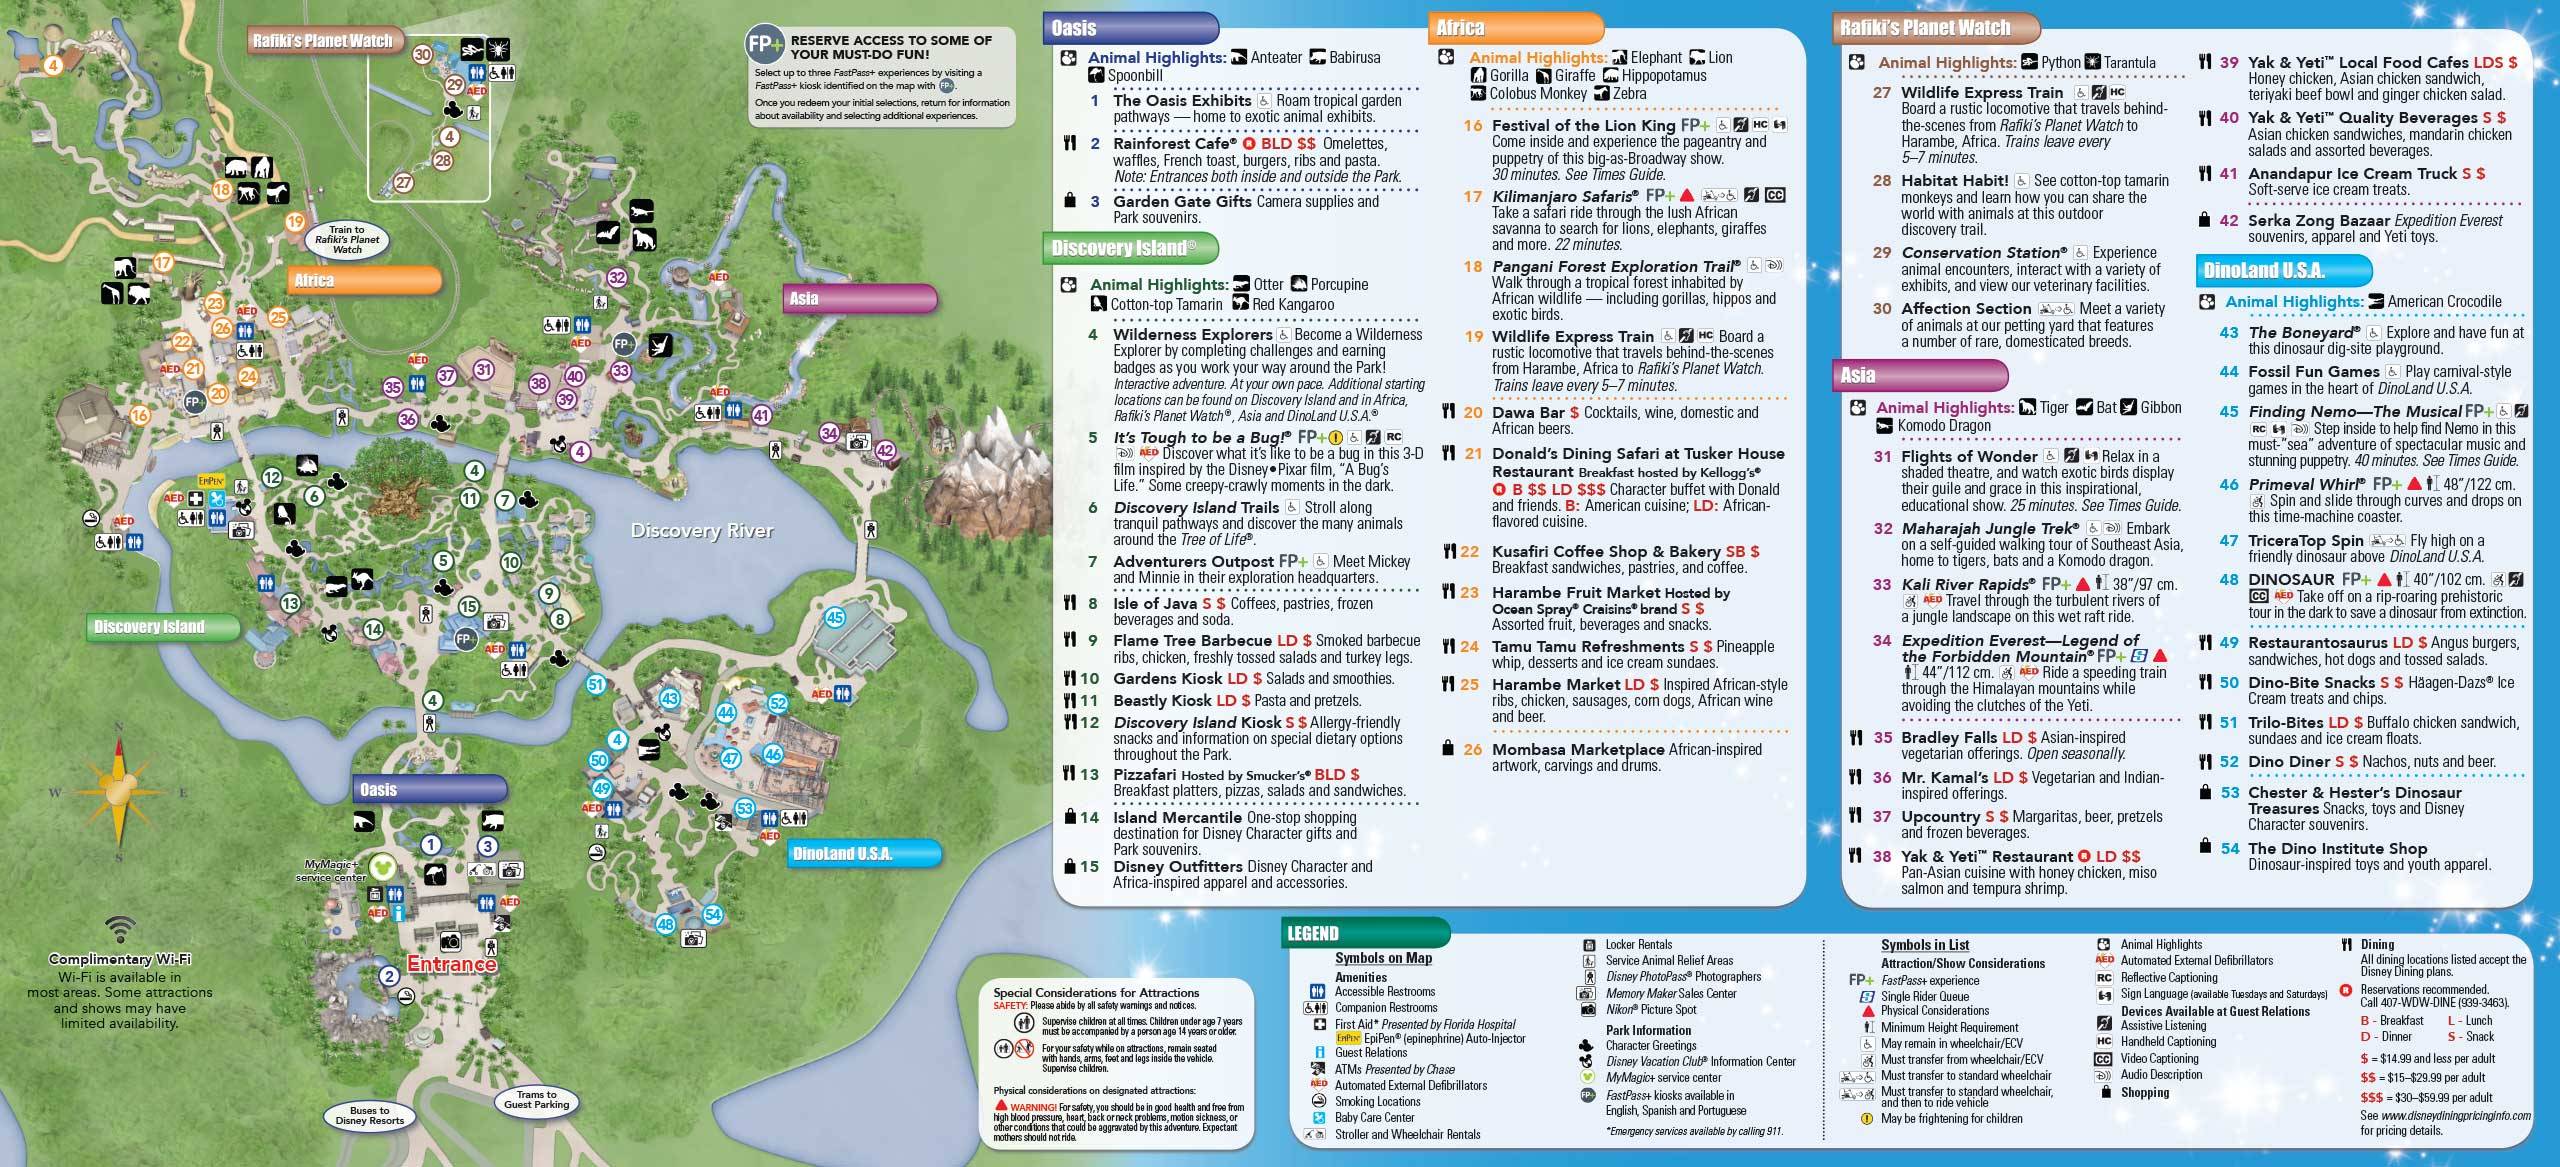 Disney's Animal Kingdom Guide Map May 2015 - Back